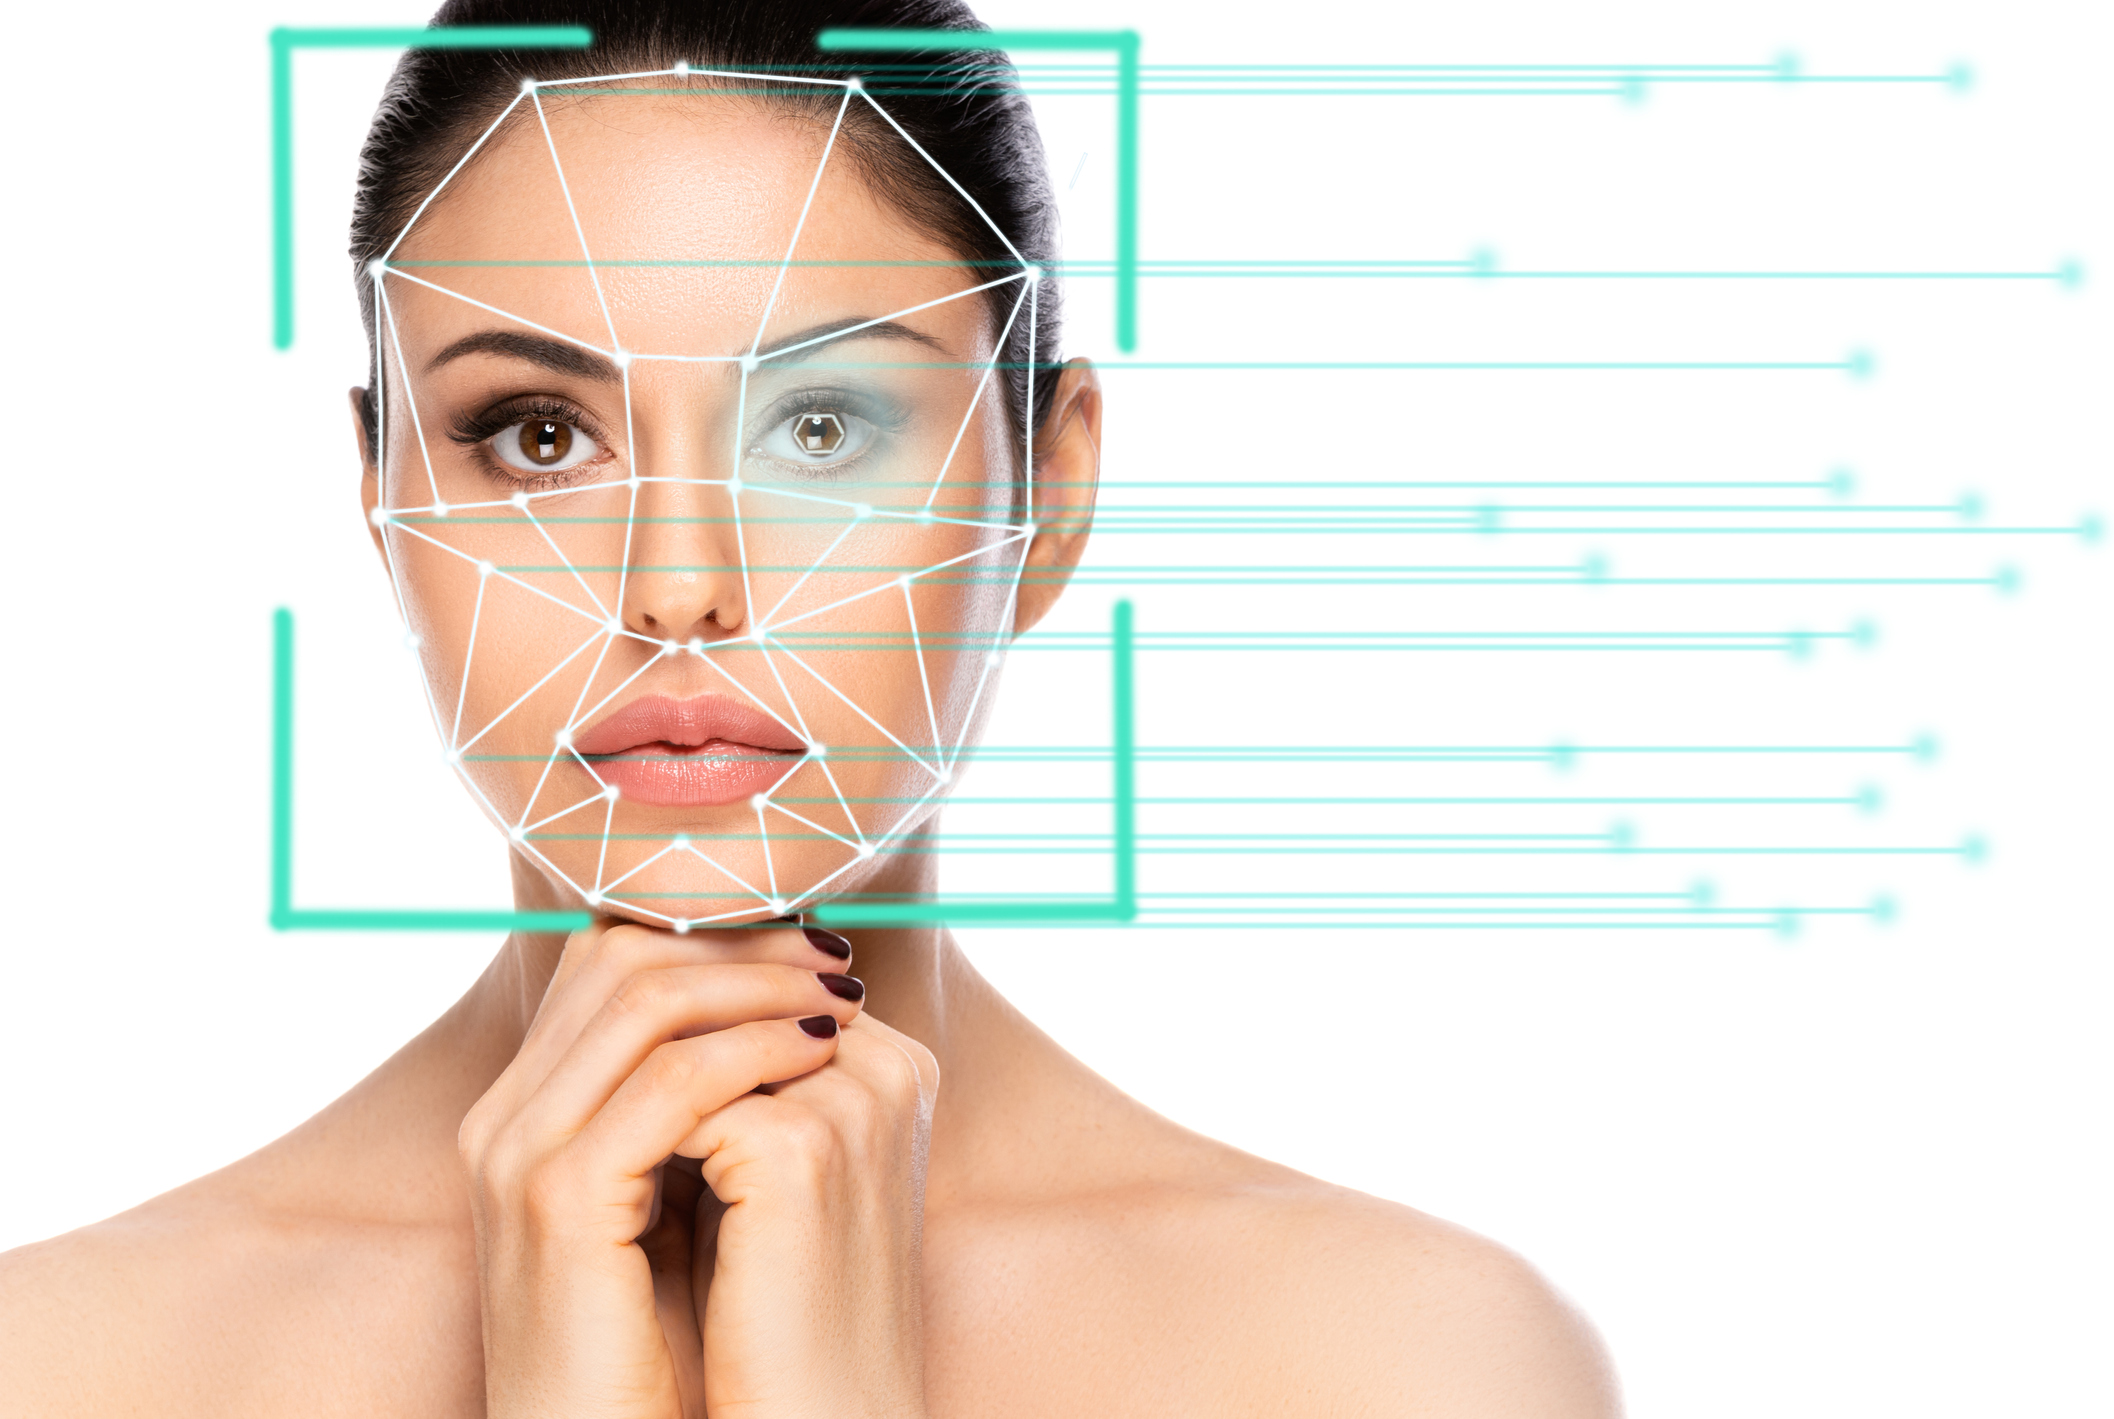 Escáner biométrico facial a mujer.